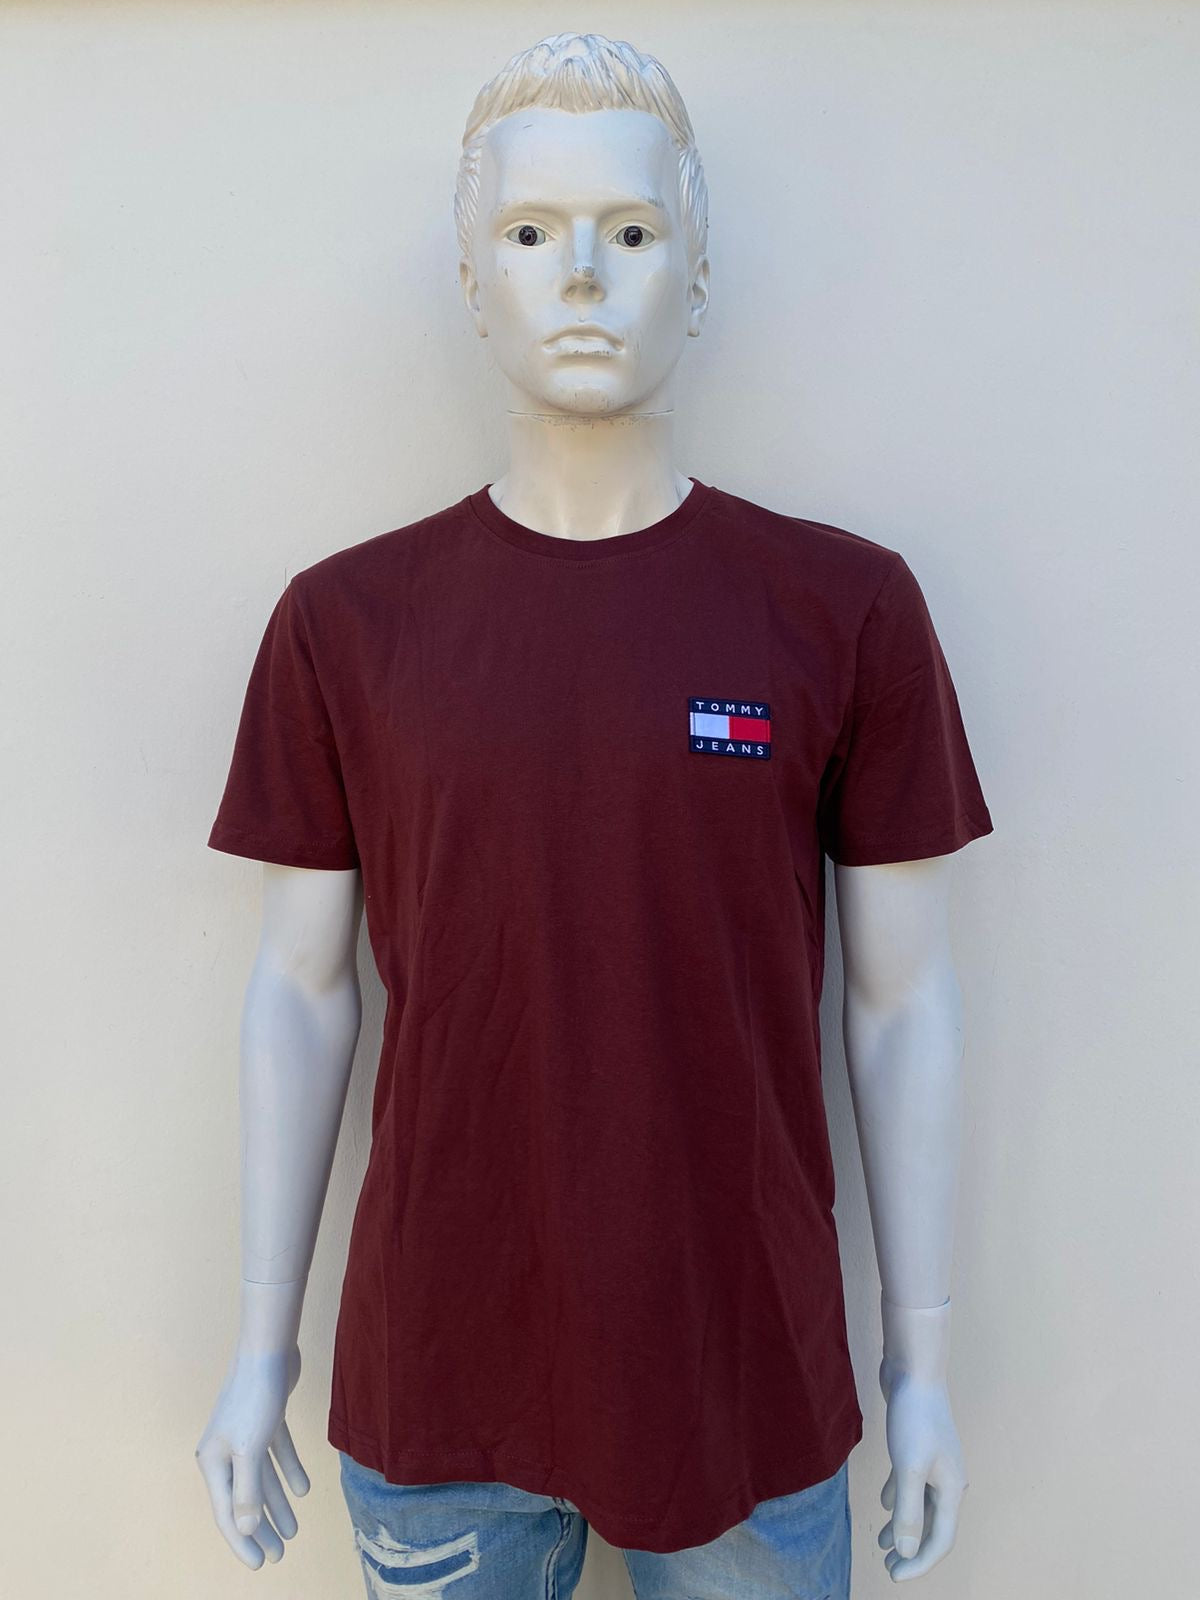 T-shirt Tommy Hilfiger rojo vino opaco Original con logotipo Tommy Jeans